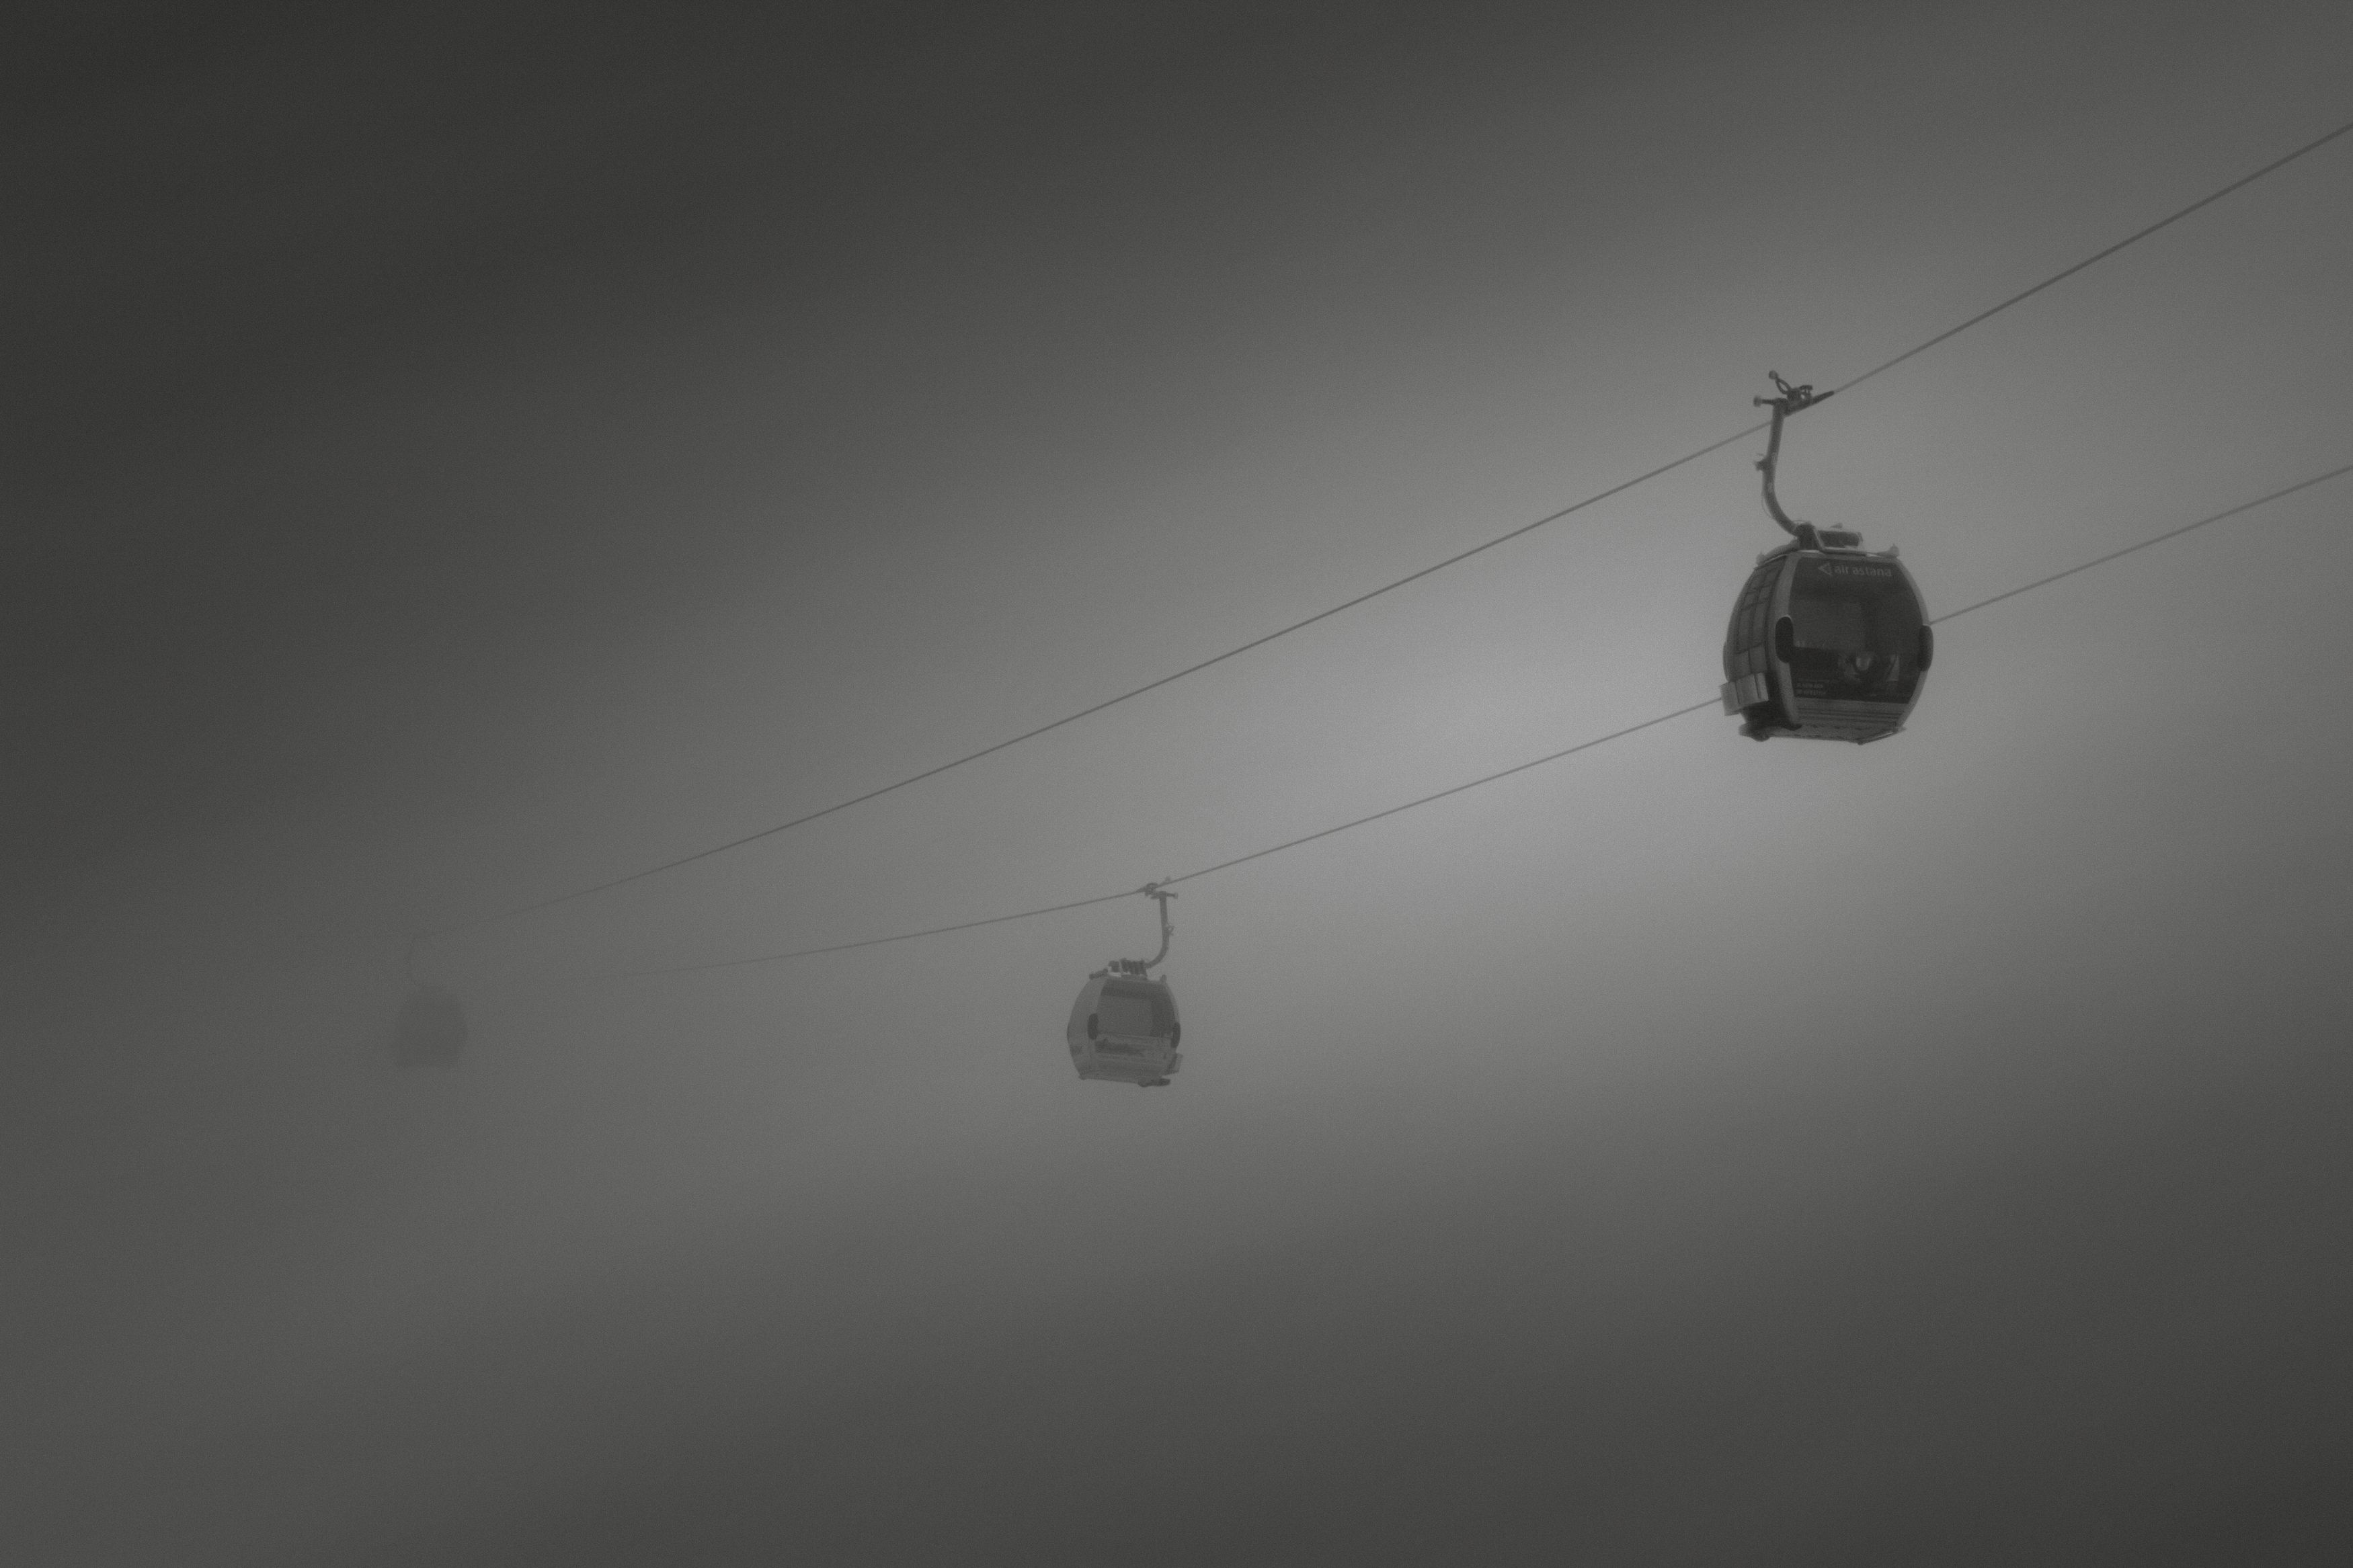 канатная дорога туман фуникулёр свет фотография чёрно-белое, Еремеев Дмитрий